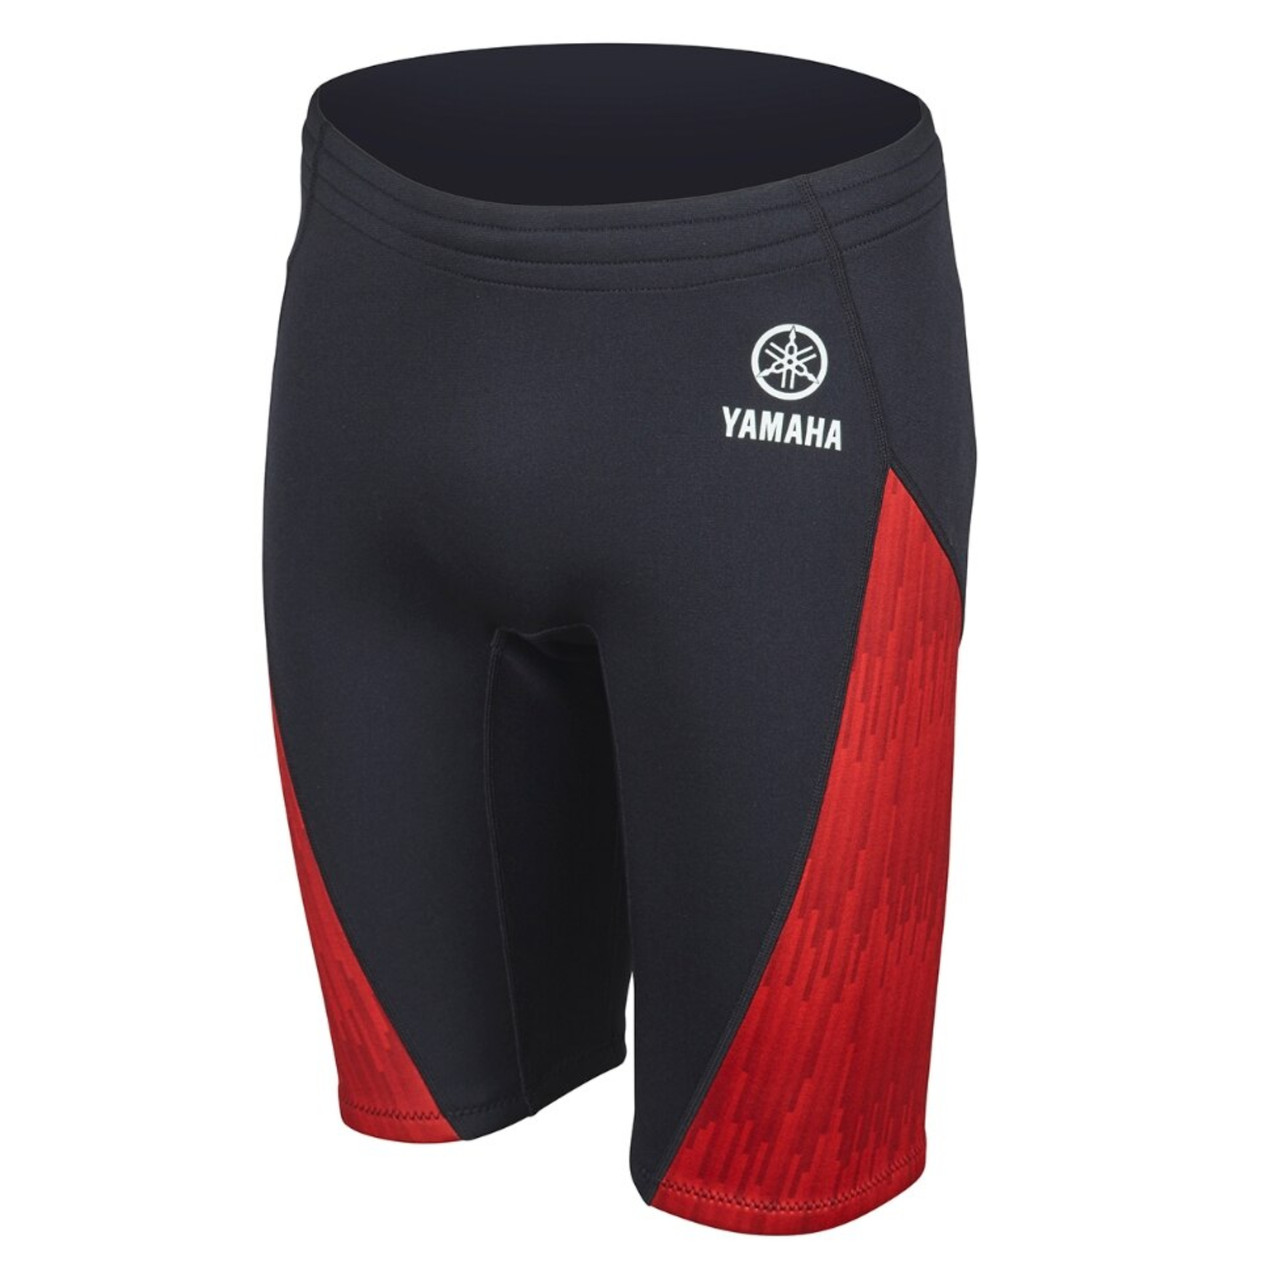 Yamaha New OEM Men's Neoprene Ride Shorts, Large, MAR-19SNE-RD-LG